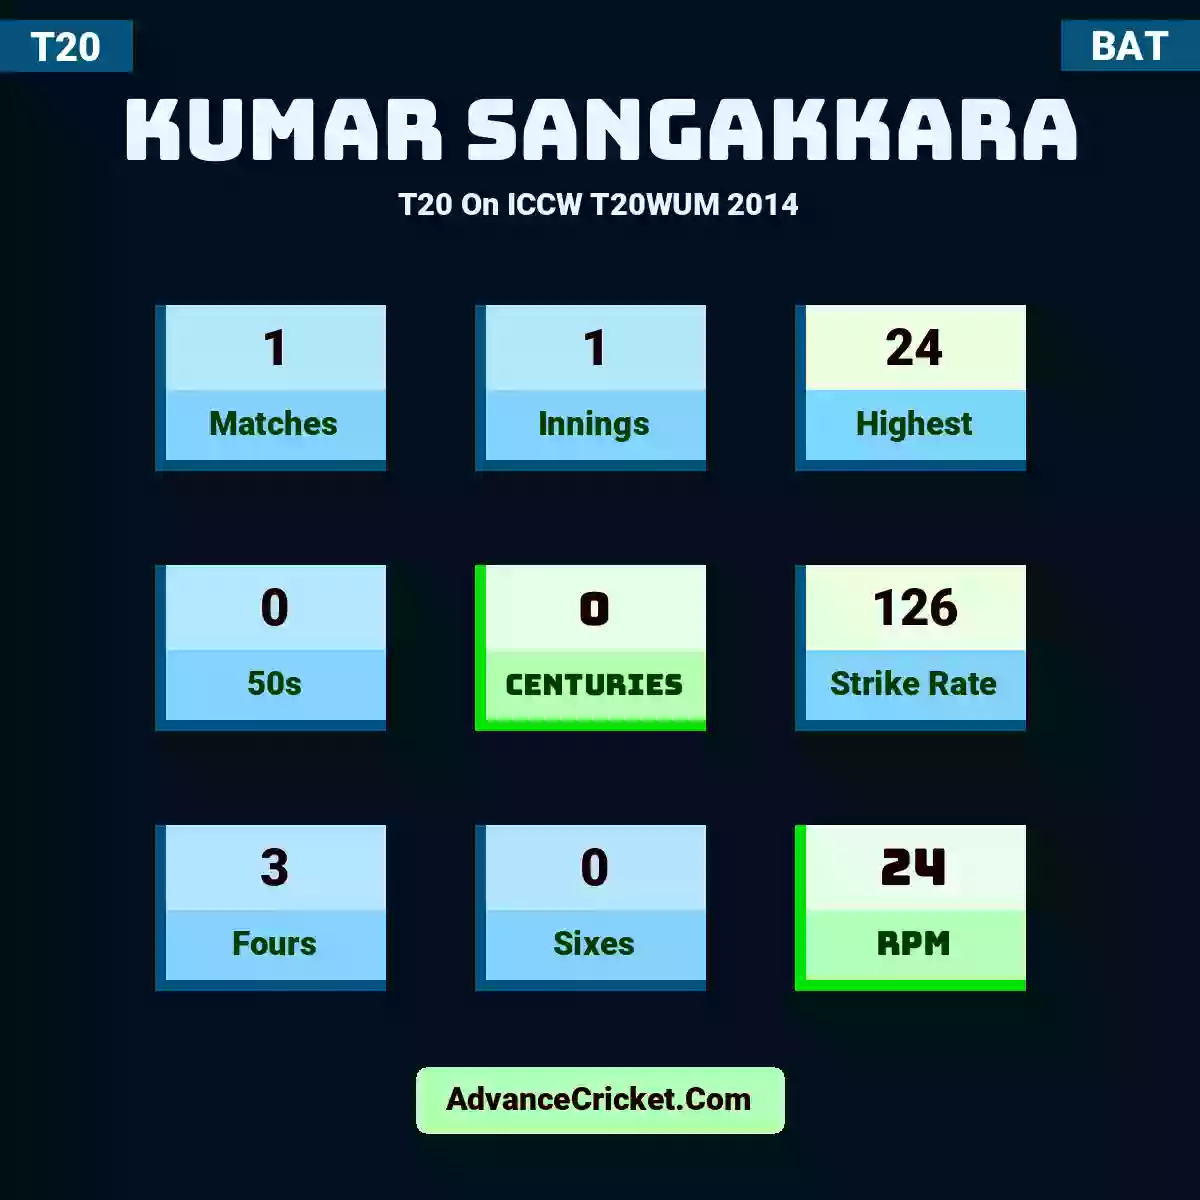 Kumar Sangakkara T20  On ICCW T20WUM 2014, Kumar Sangakkara played 1 matches, scored 24 runs as highest, 0 half-centuries, and 0 centuries, with a strike rate of 126. K.Sangakkara hit 3 fours and 0 sixes, with an RPM of 24.